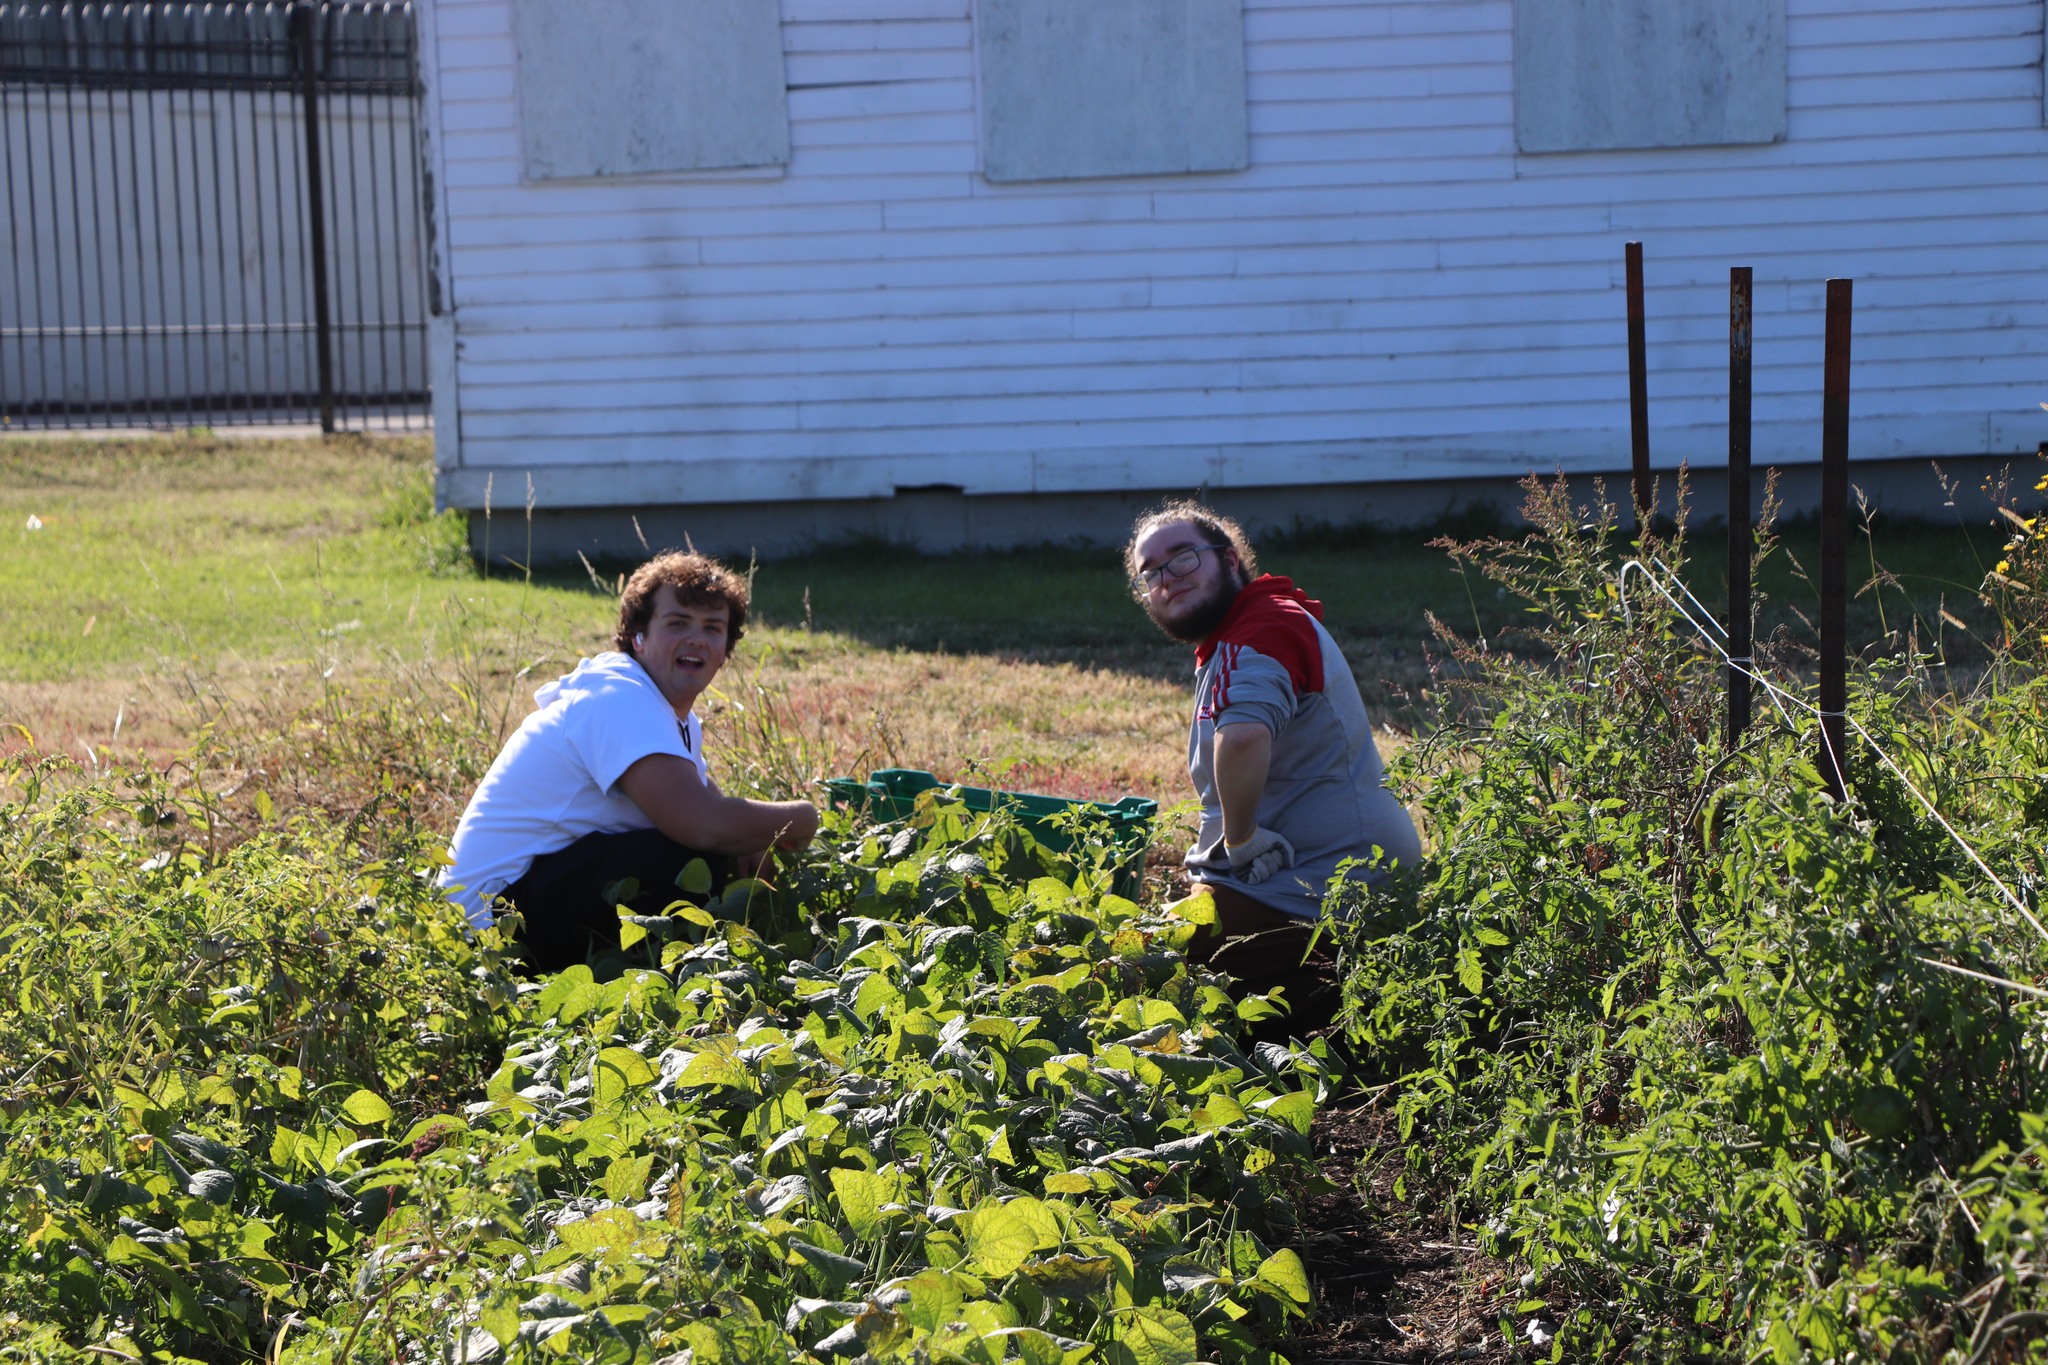 Two students smile while harvesting veggies at an urban garden.